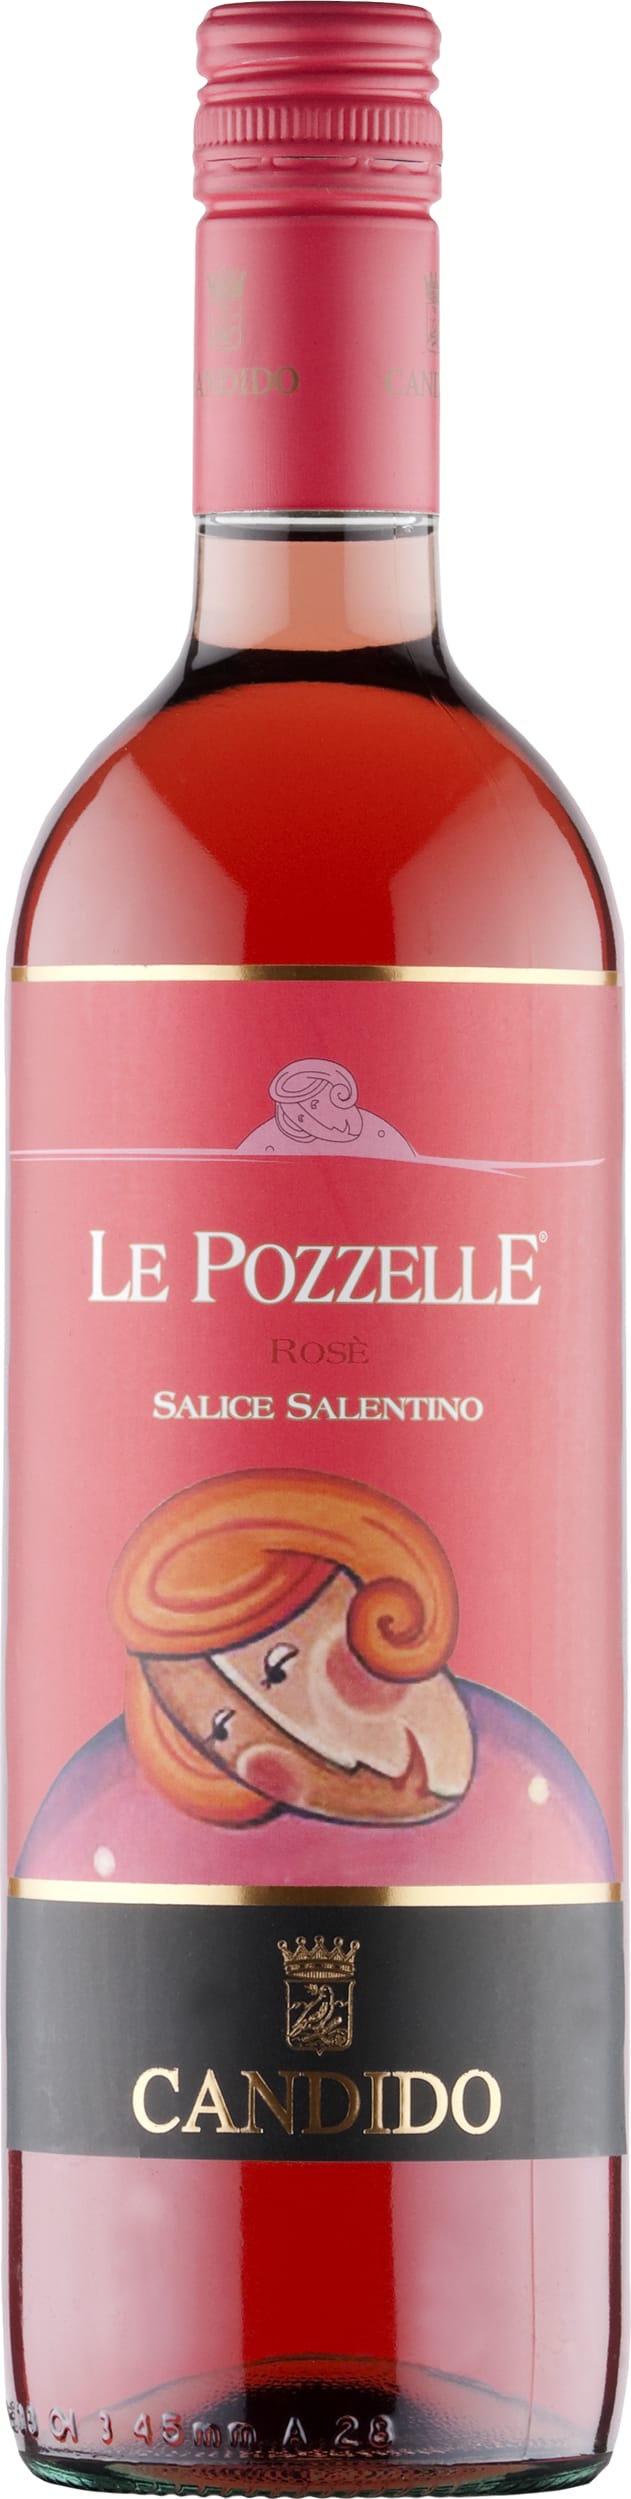 Francesco Candido Salice Salentino Rosato Le Pozzelle 2022 75cl - Buy Francesco Candido Wines from GREAT WINES DIRECT wine shop